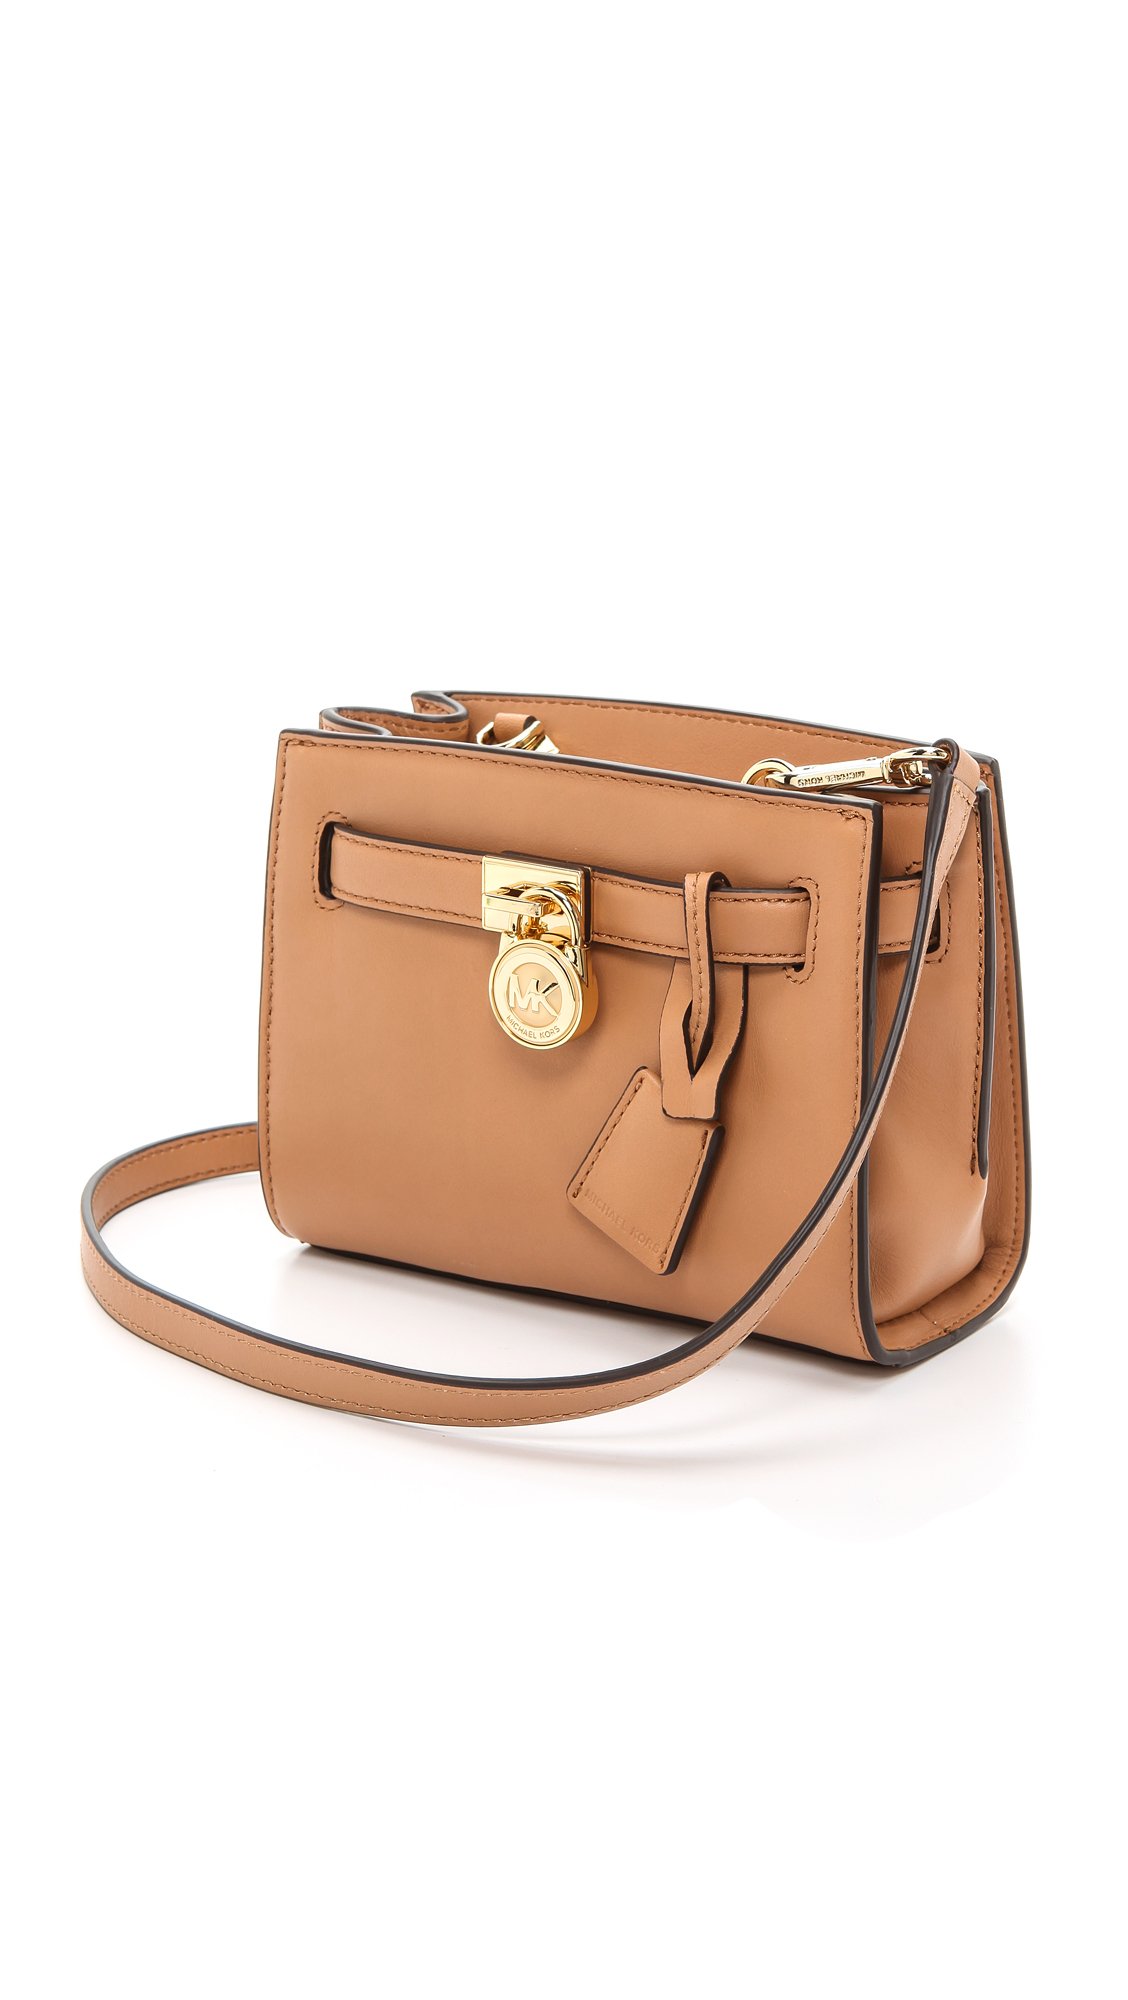 michael kors small brown purse